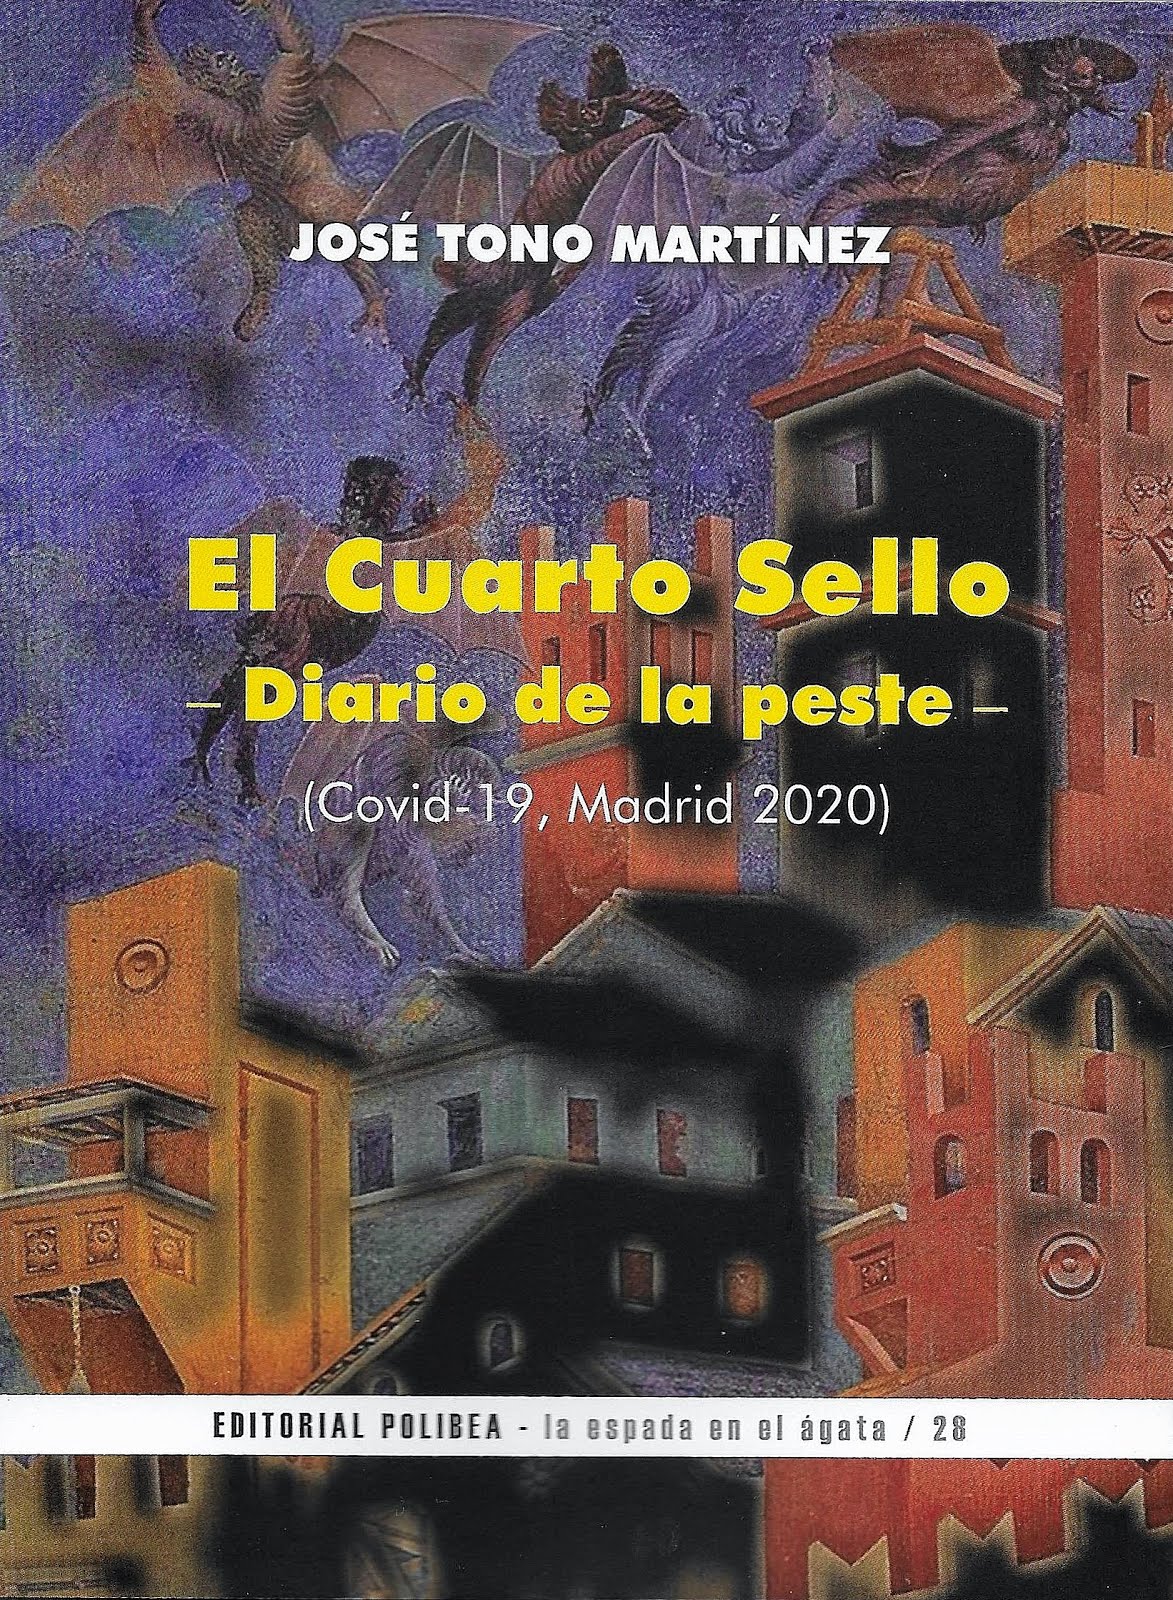 El Cuarto Sello. Diario de la peste. Covid 19, Madrid 2020